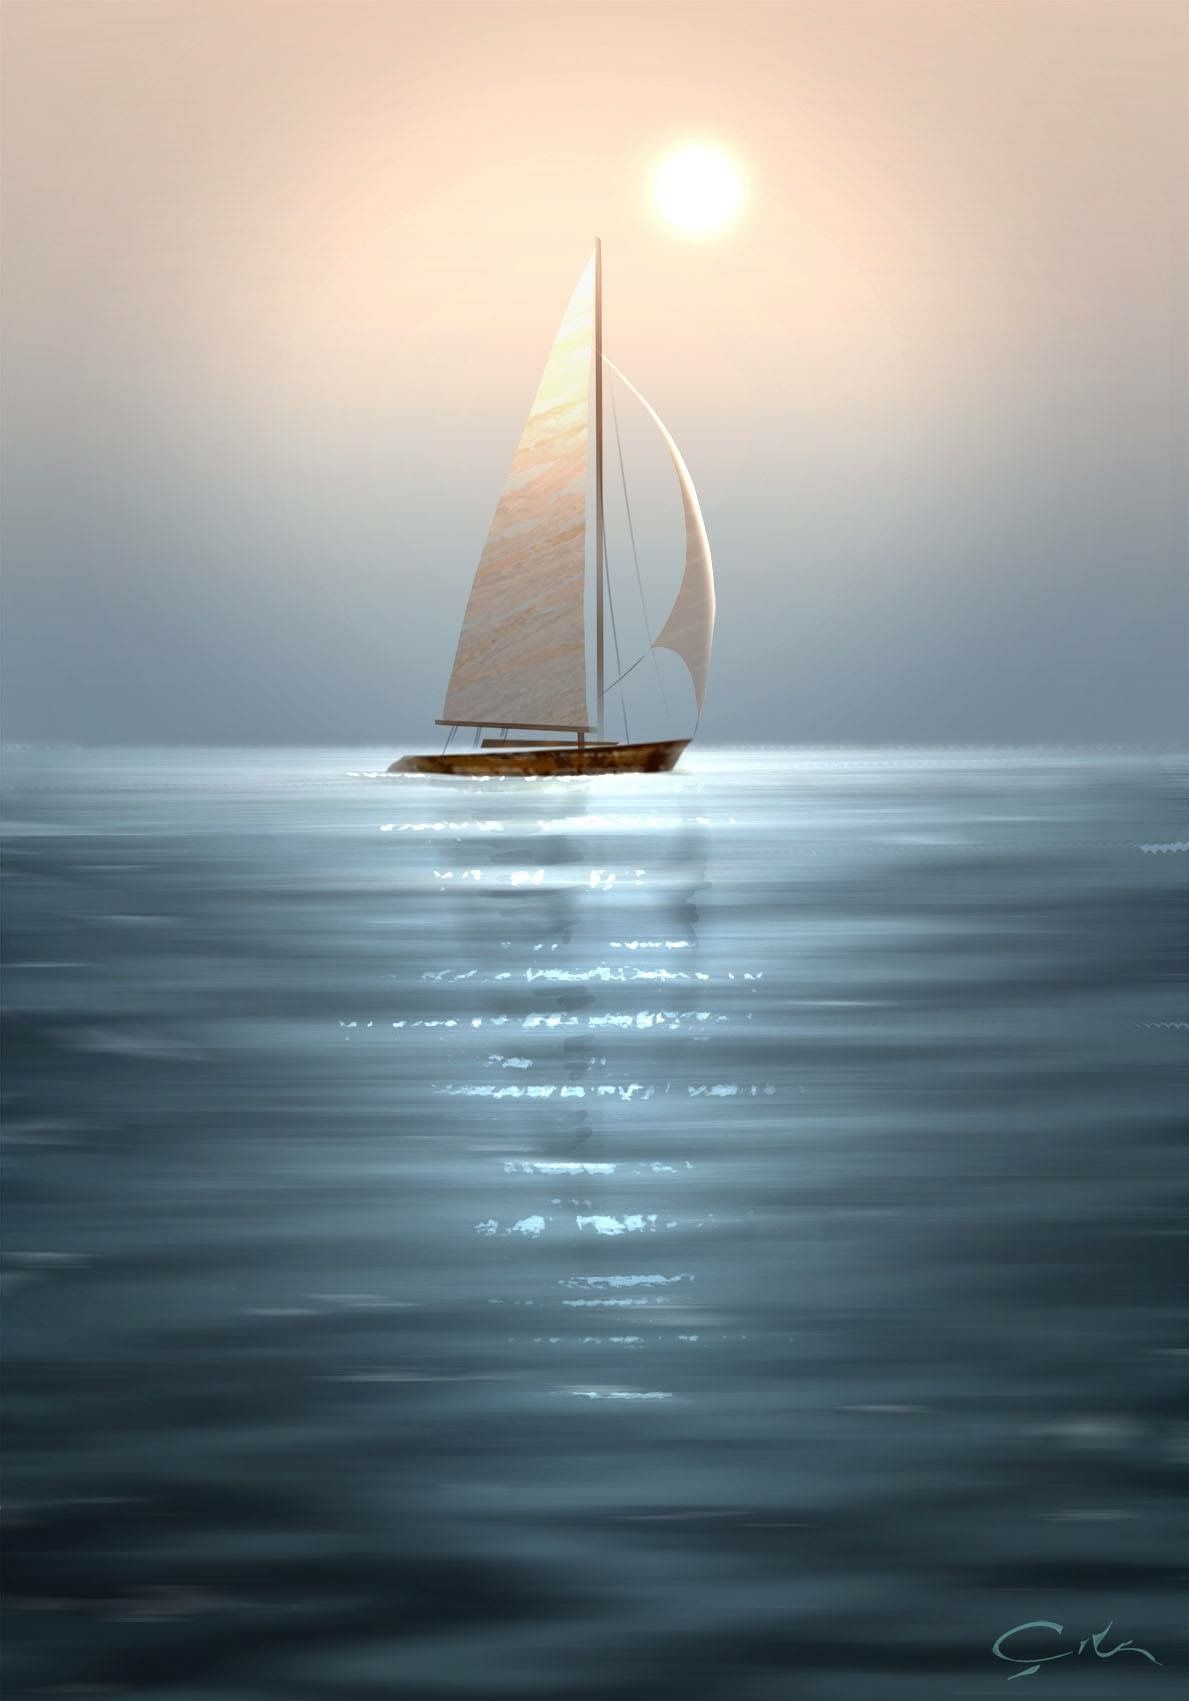 This desktop wallpaper showcases a minimalist seascape with a single  sailboat on a calm sea